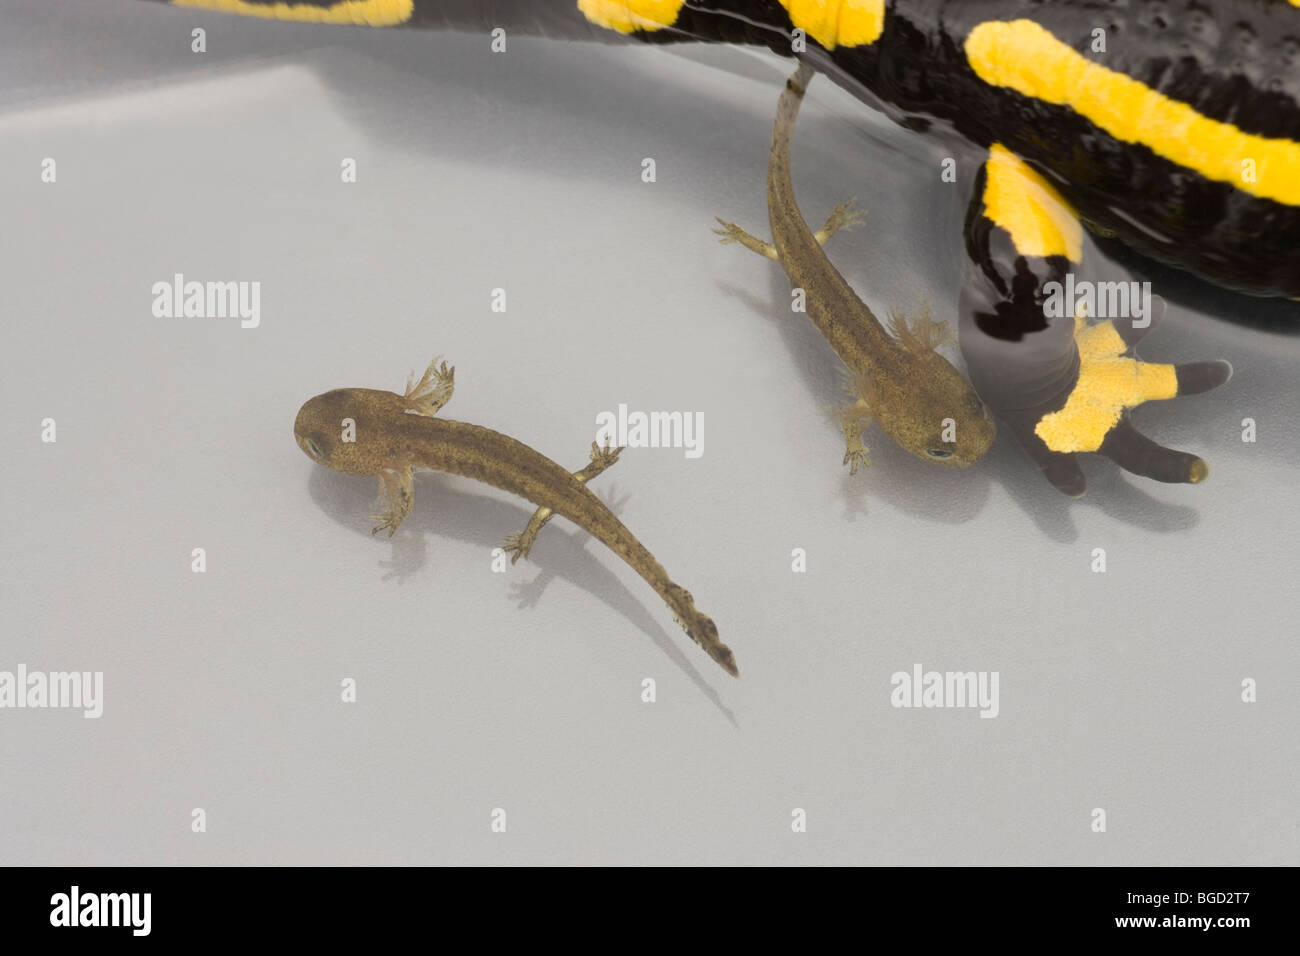 Europäische Feuersalamander (Salamandra salamandra). Neu geborene Jungen, Kaulquappen oder Larven, neben Mutter, weiblich. Lebendgebärenden Geburt. Stockfoto